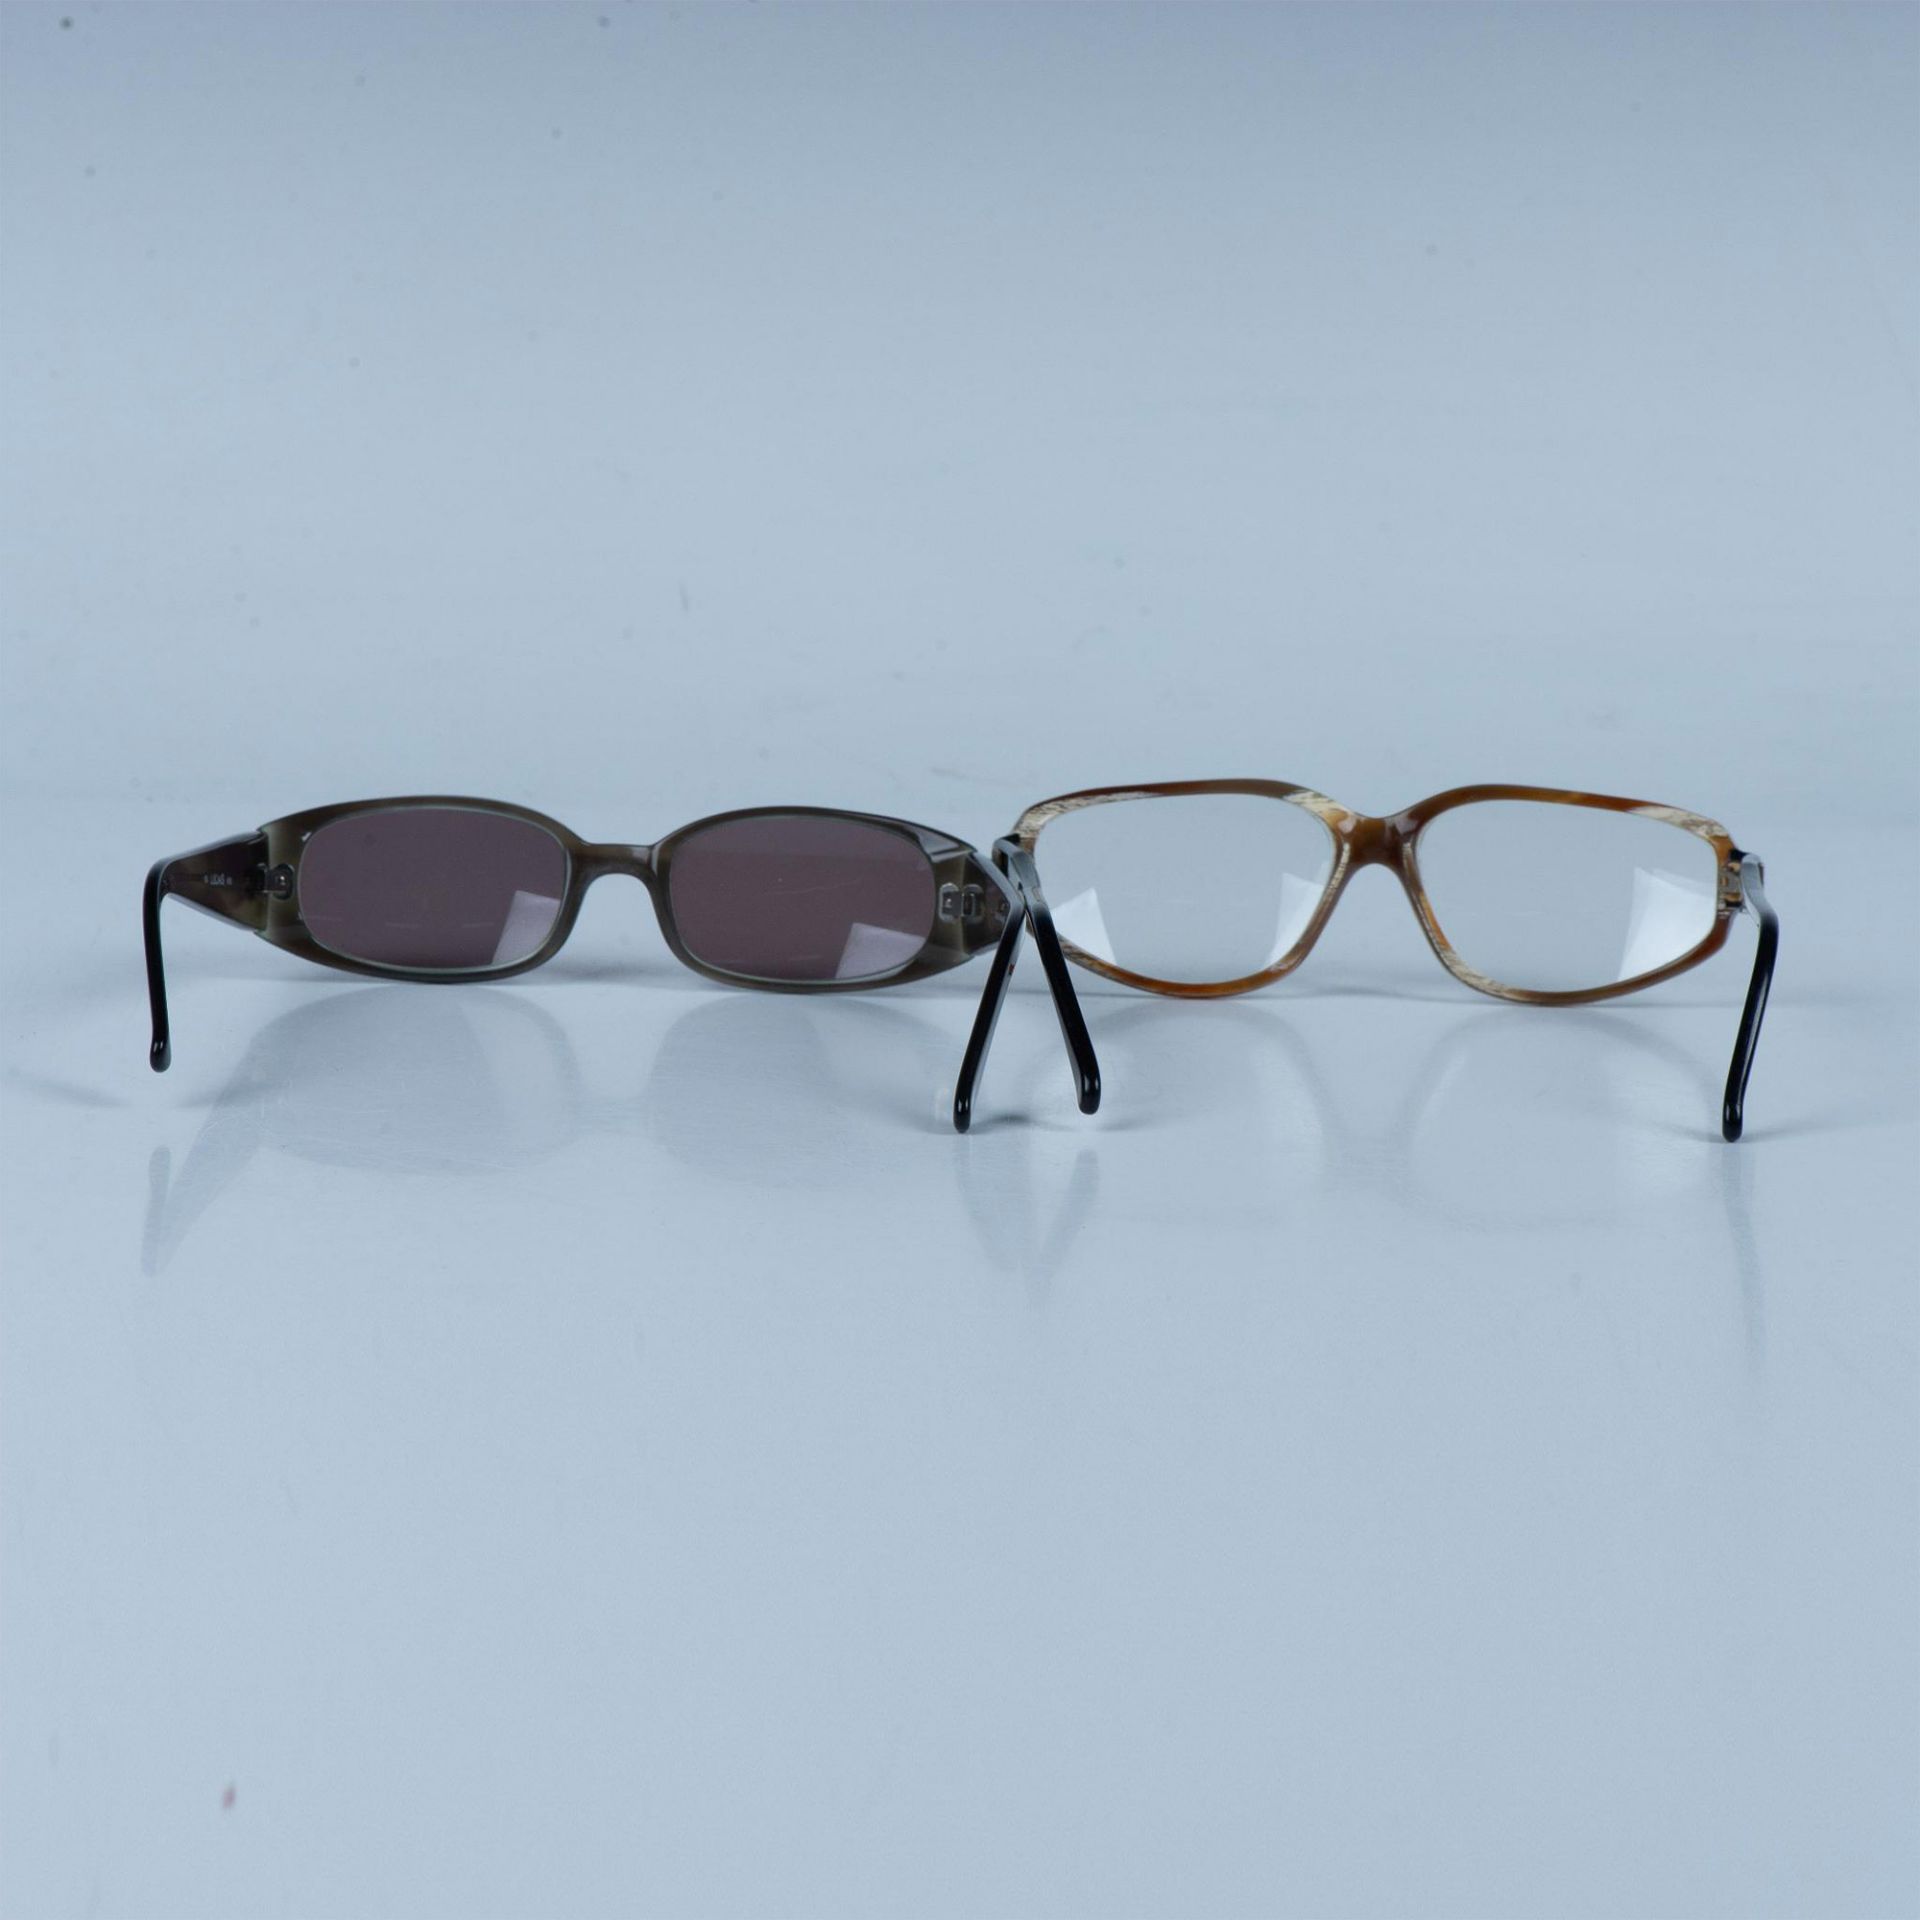 2pc Designer Eyeglass Frames - Image 3 of 11